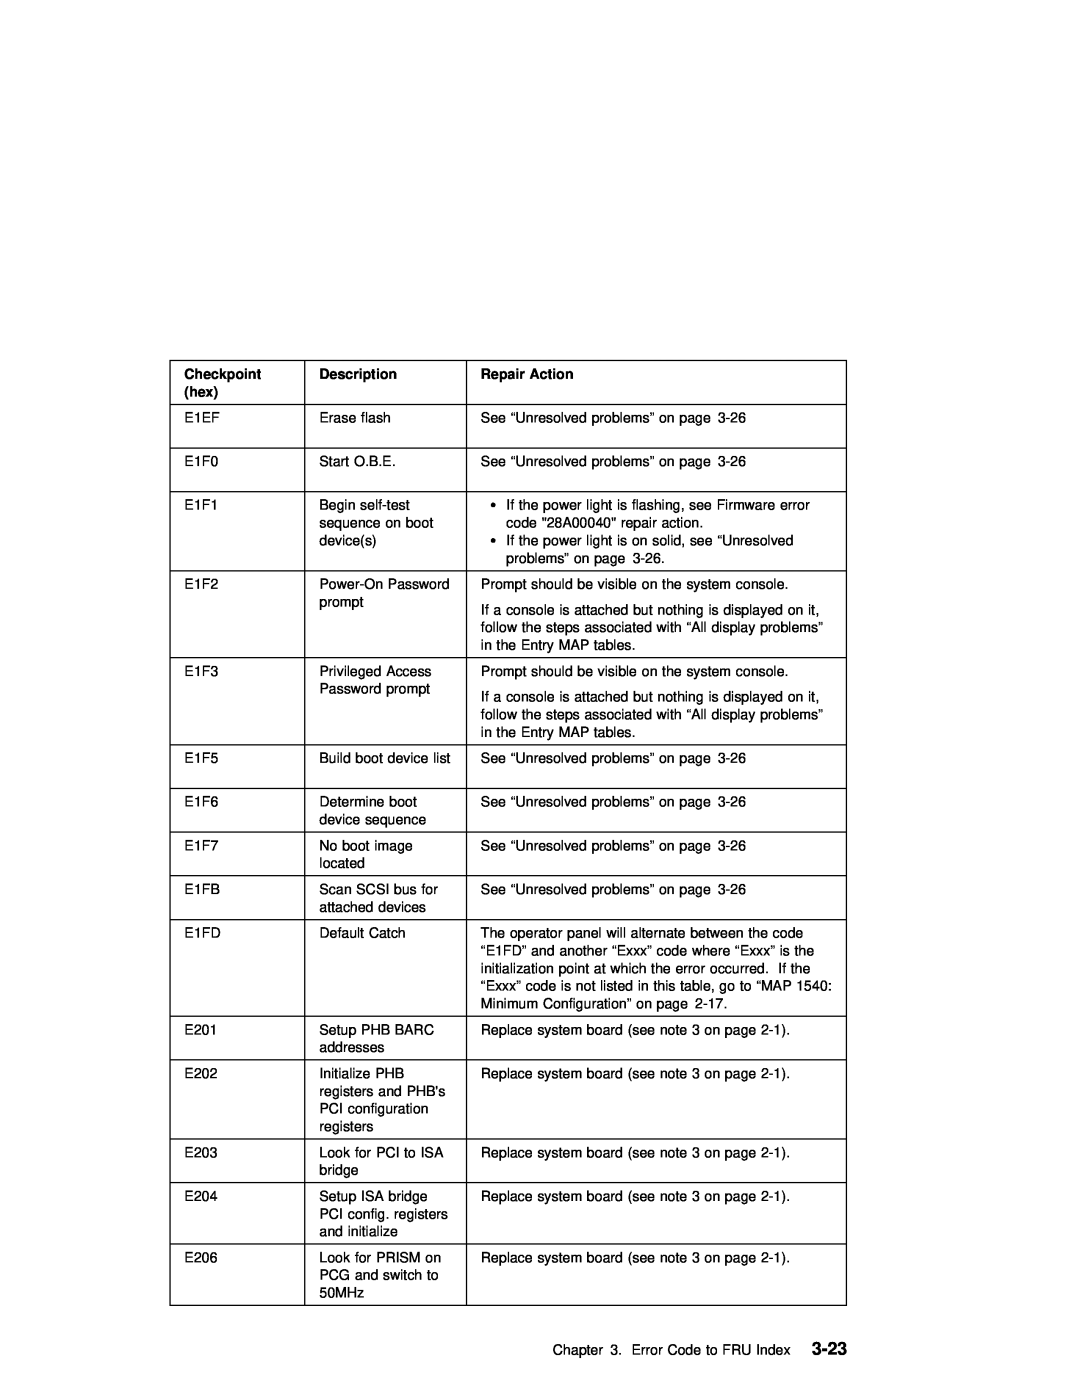 IBM B50 manual 3-23, Checkpoint, Description, Repair Action 